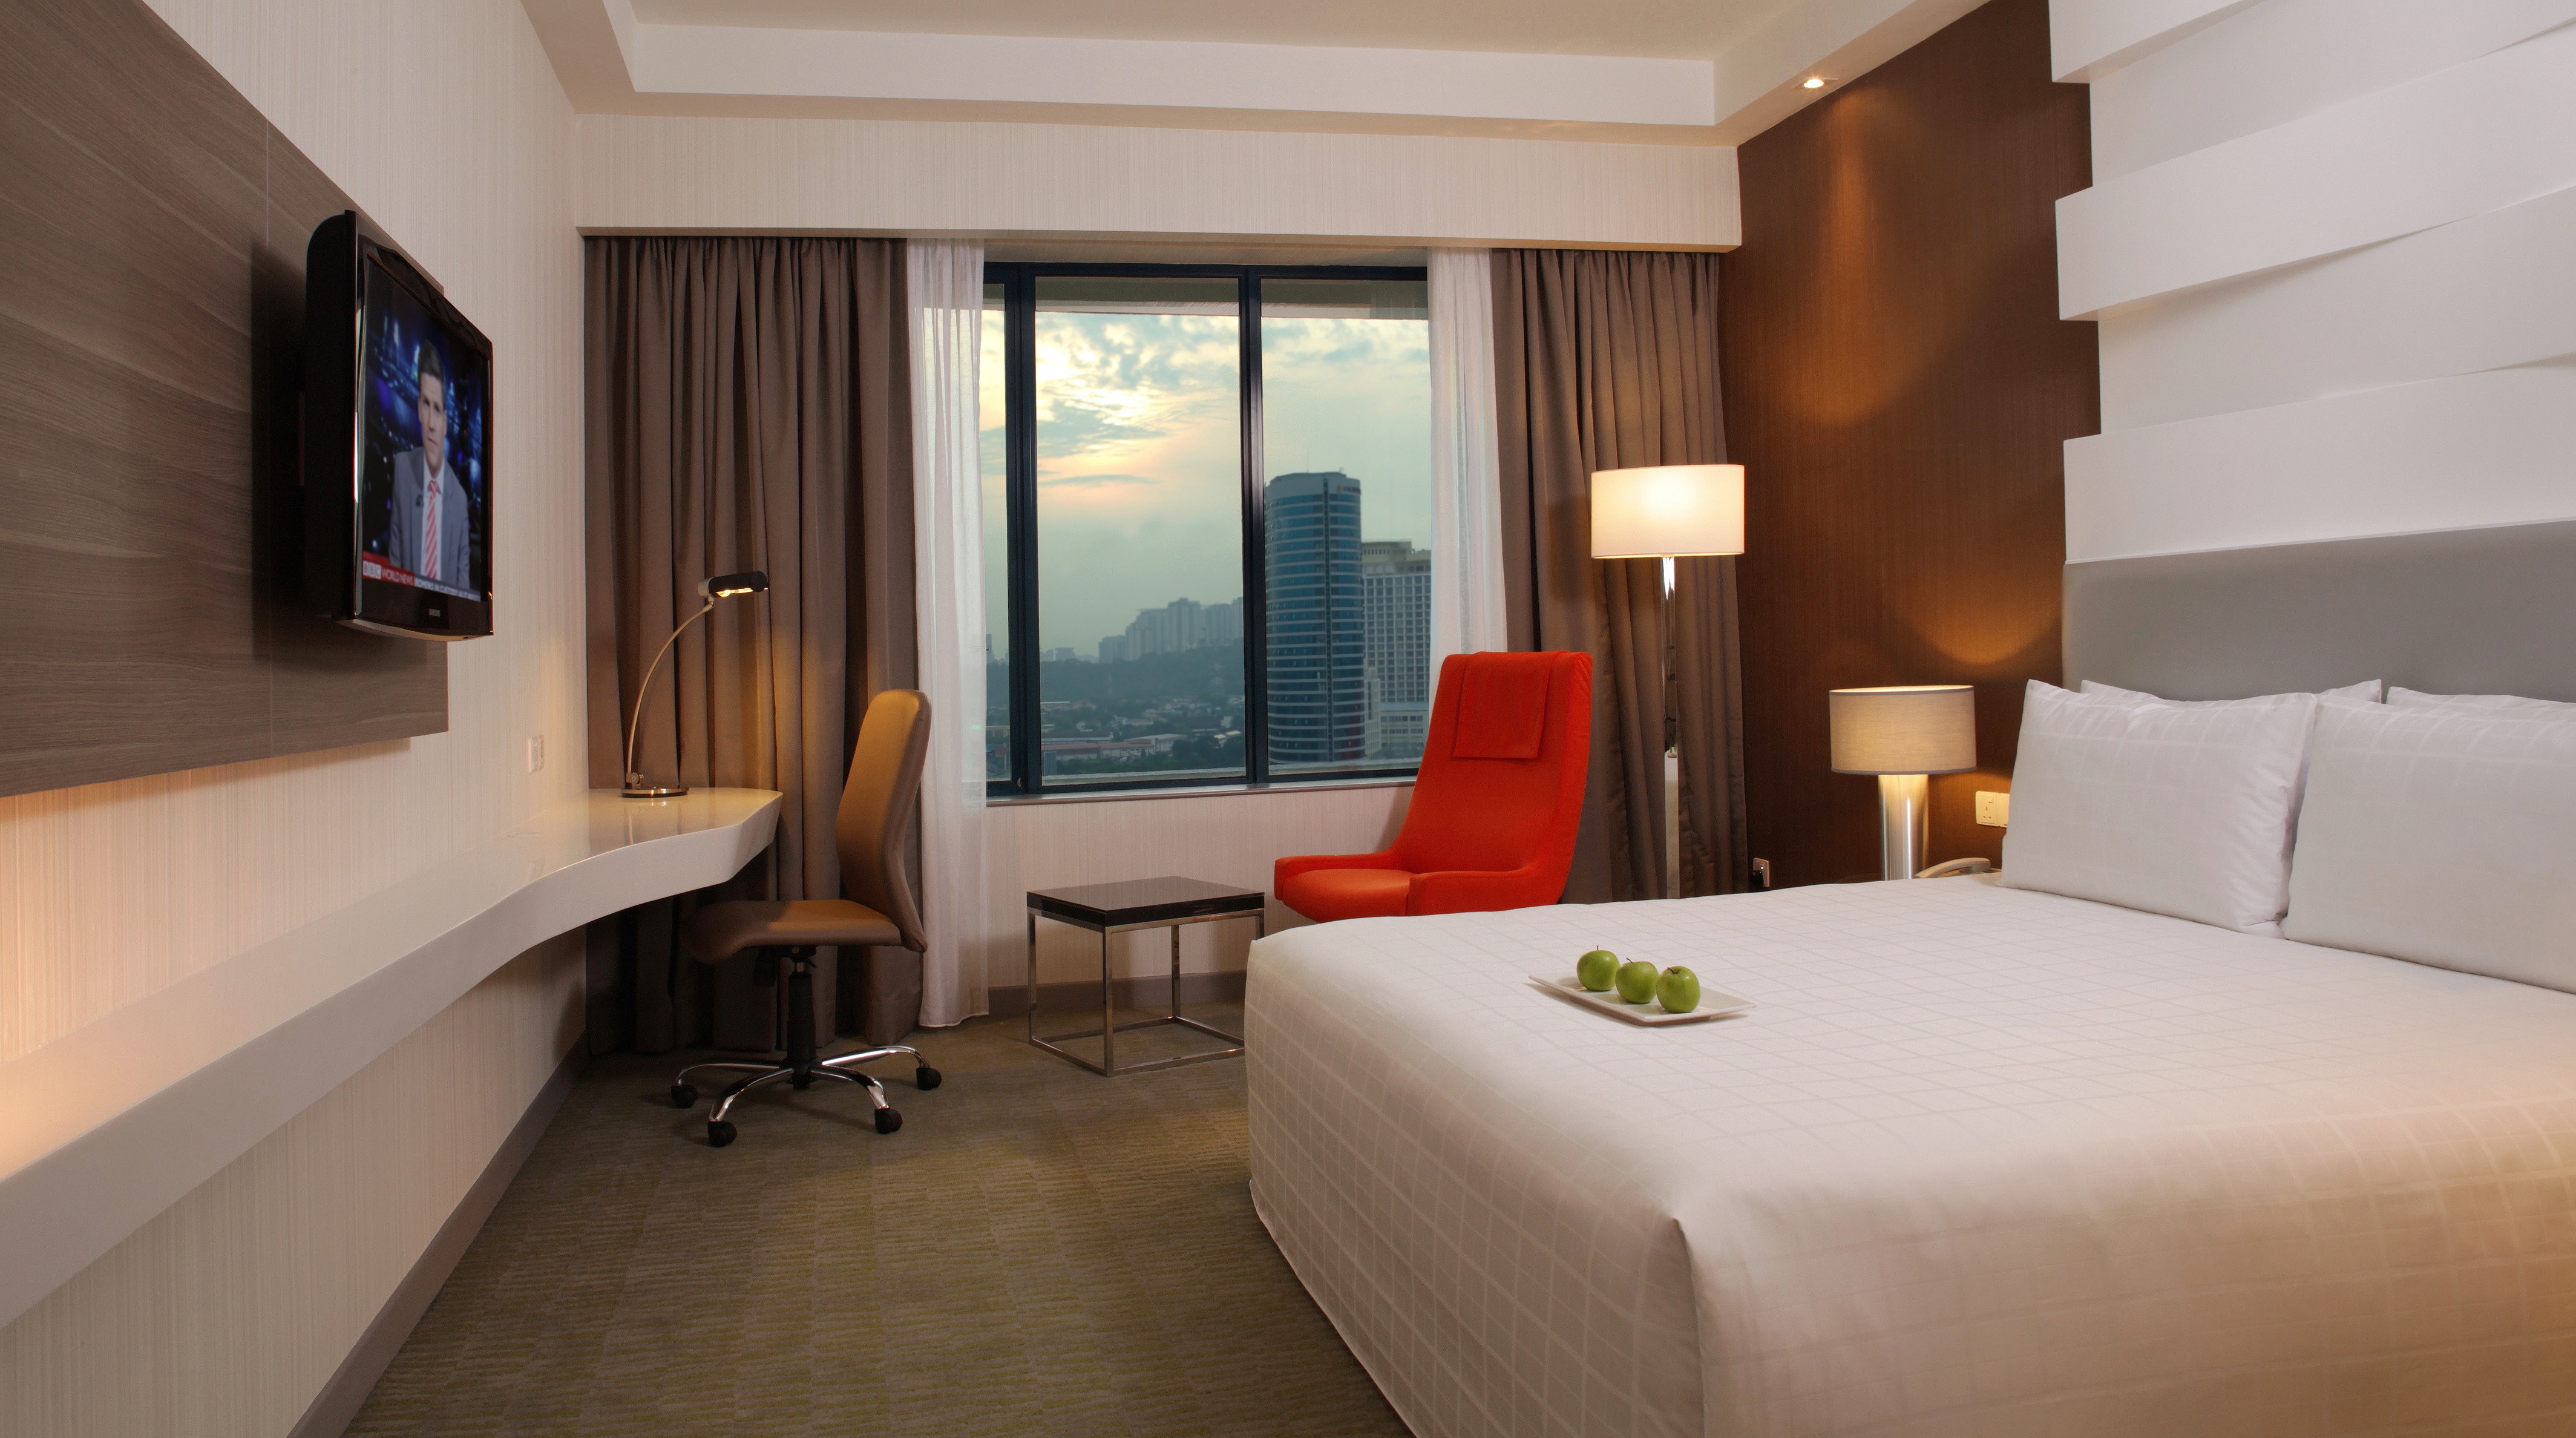 Hotel Armada Petaling Jaya Petaling Jaya Start From Sgd 55 Per Night Price Address Reviews